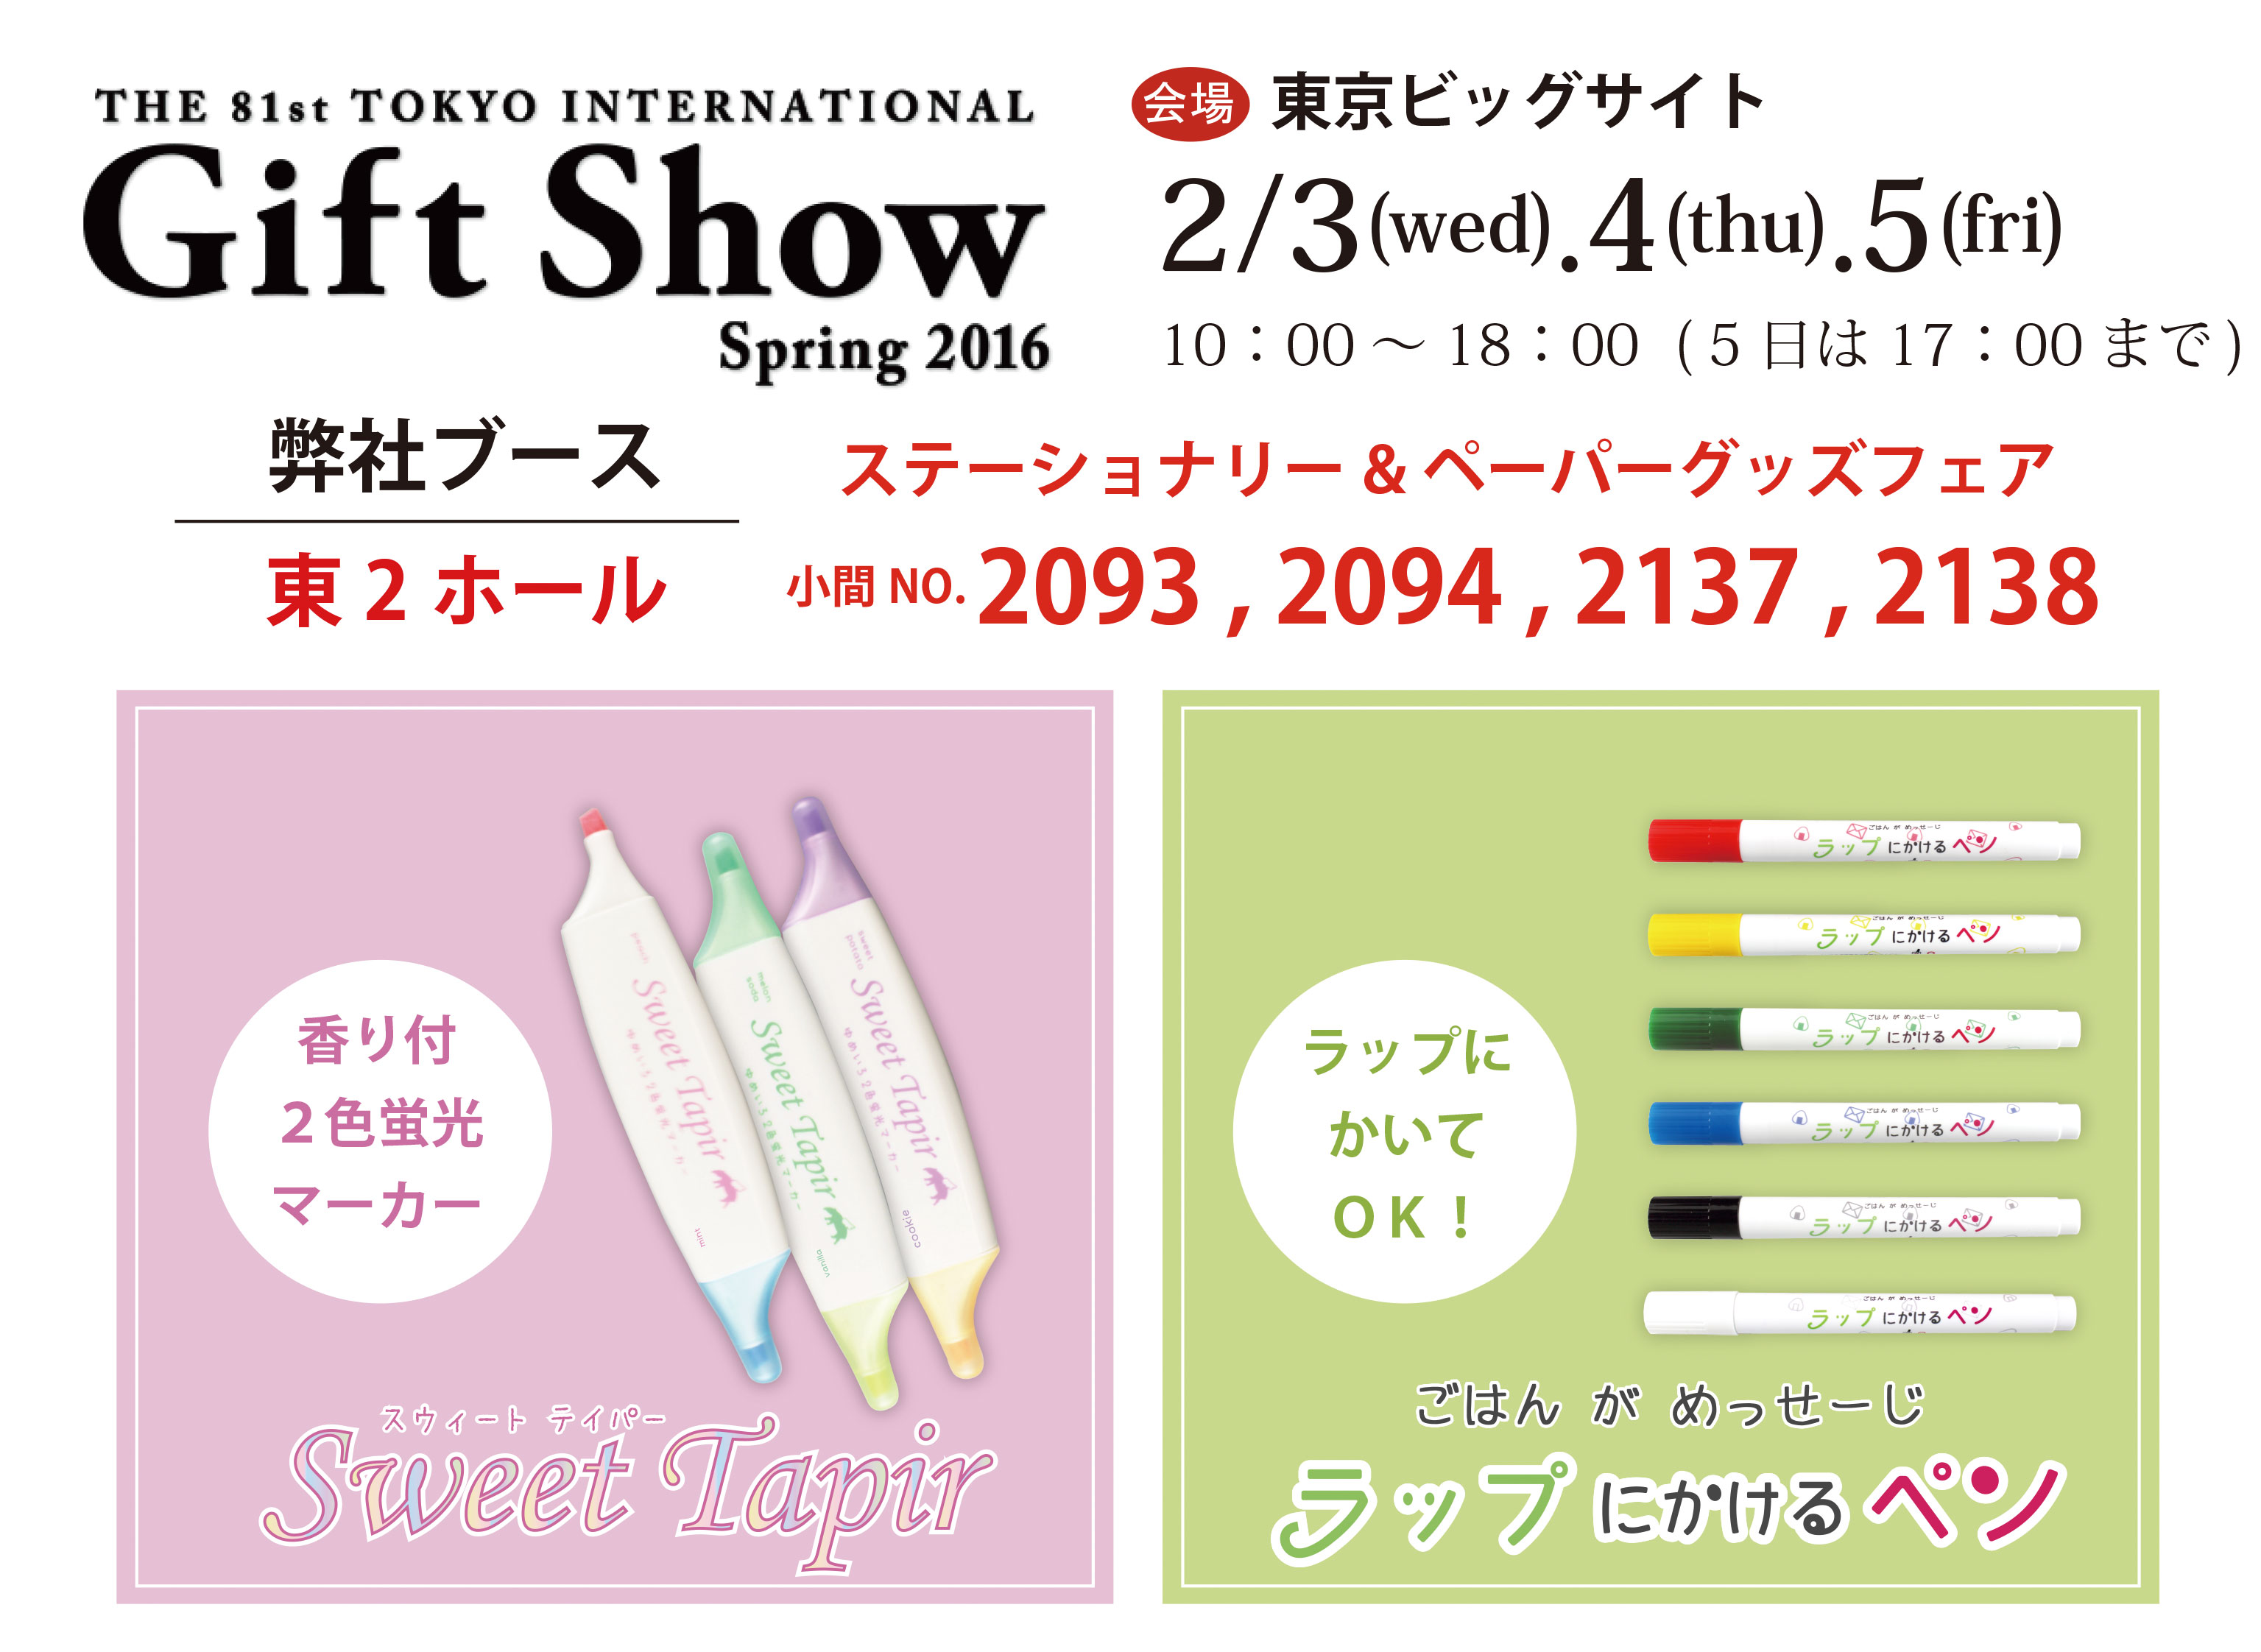 Gift Show Autumn2015のお知らせ